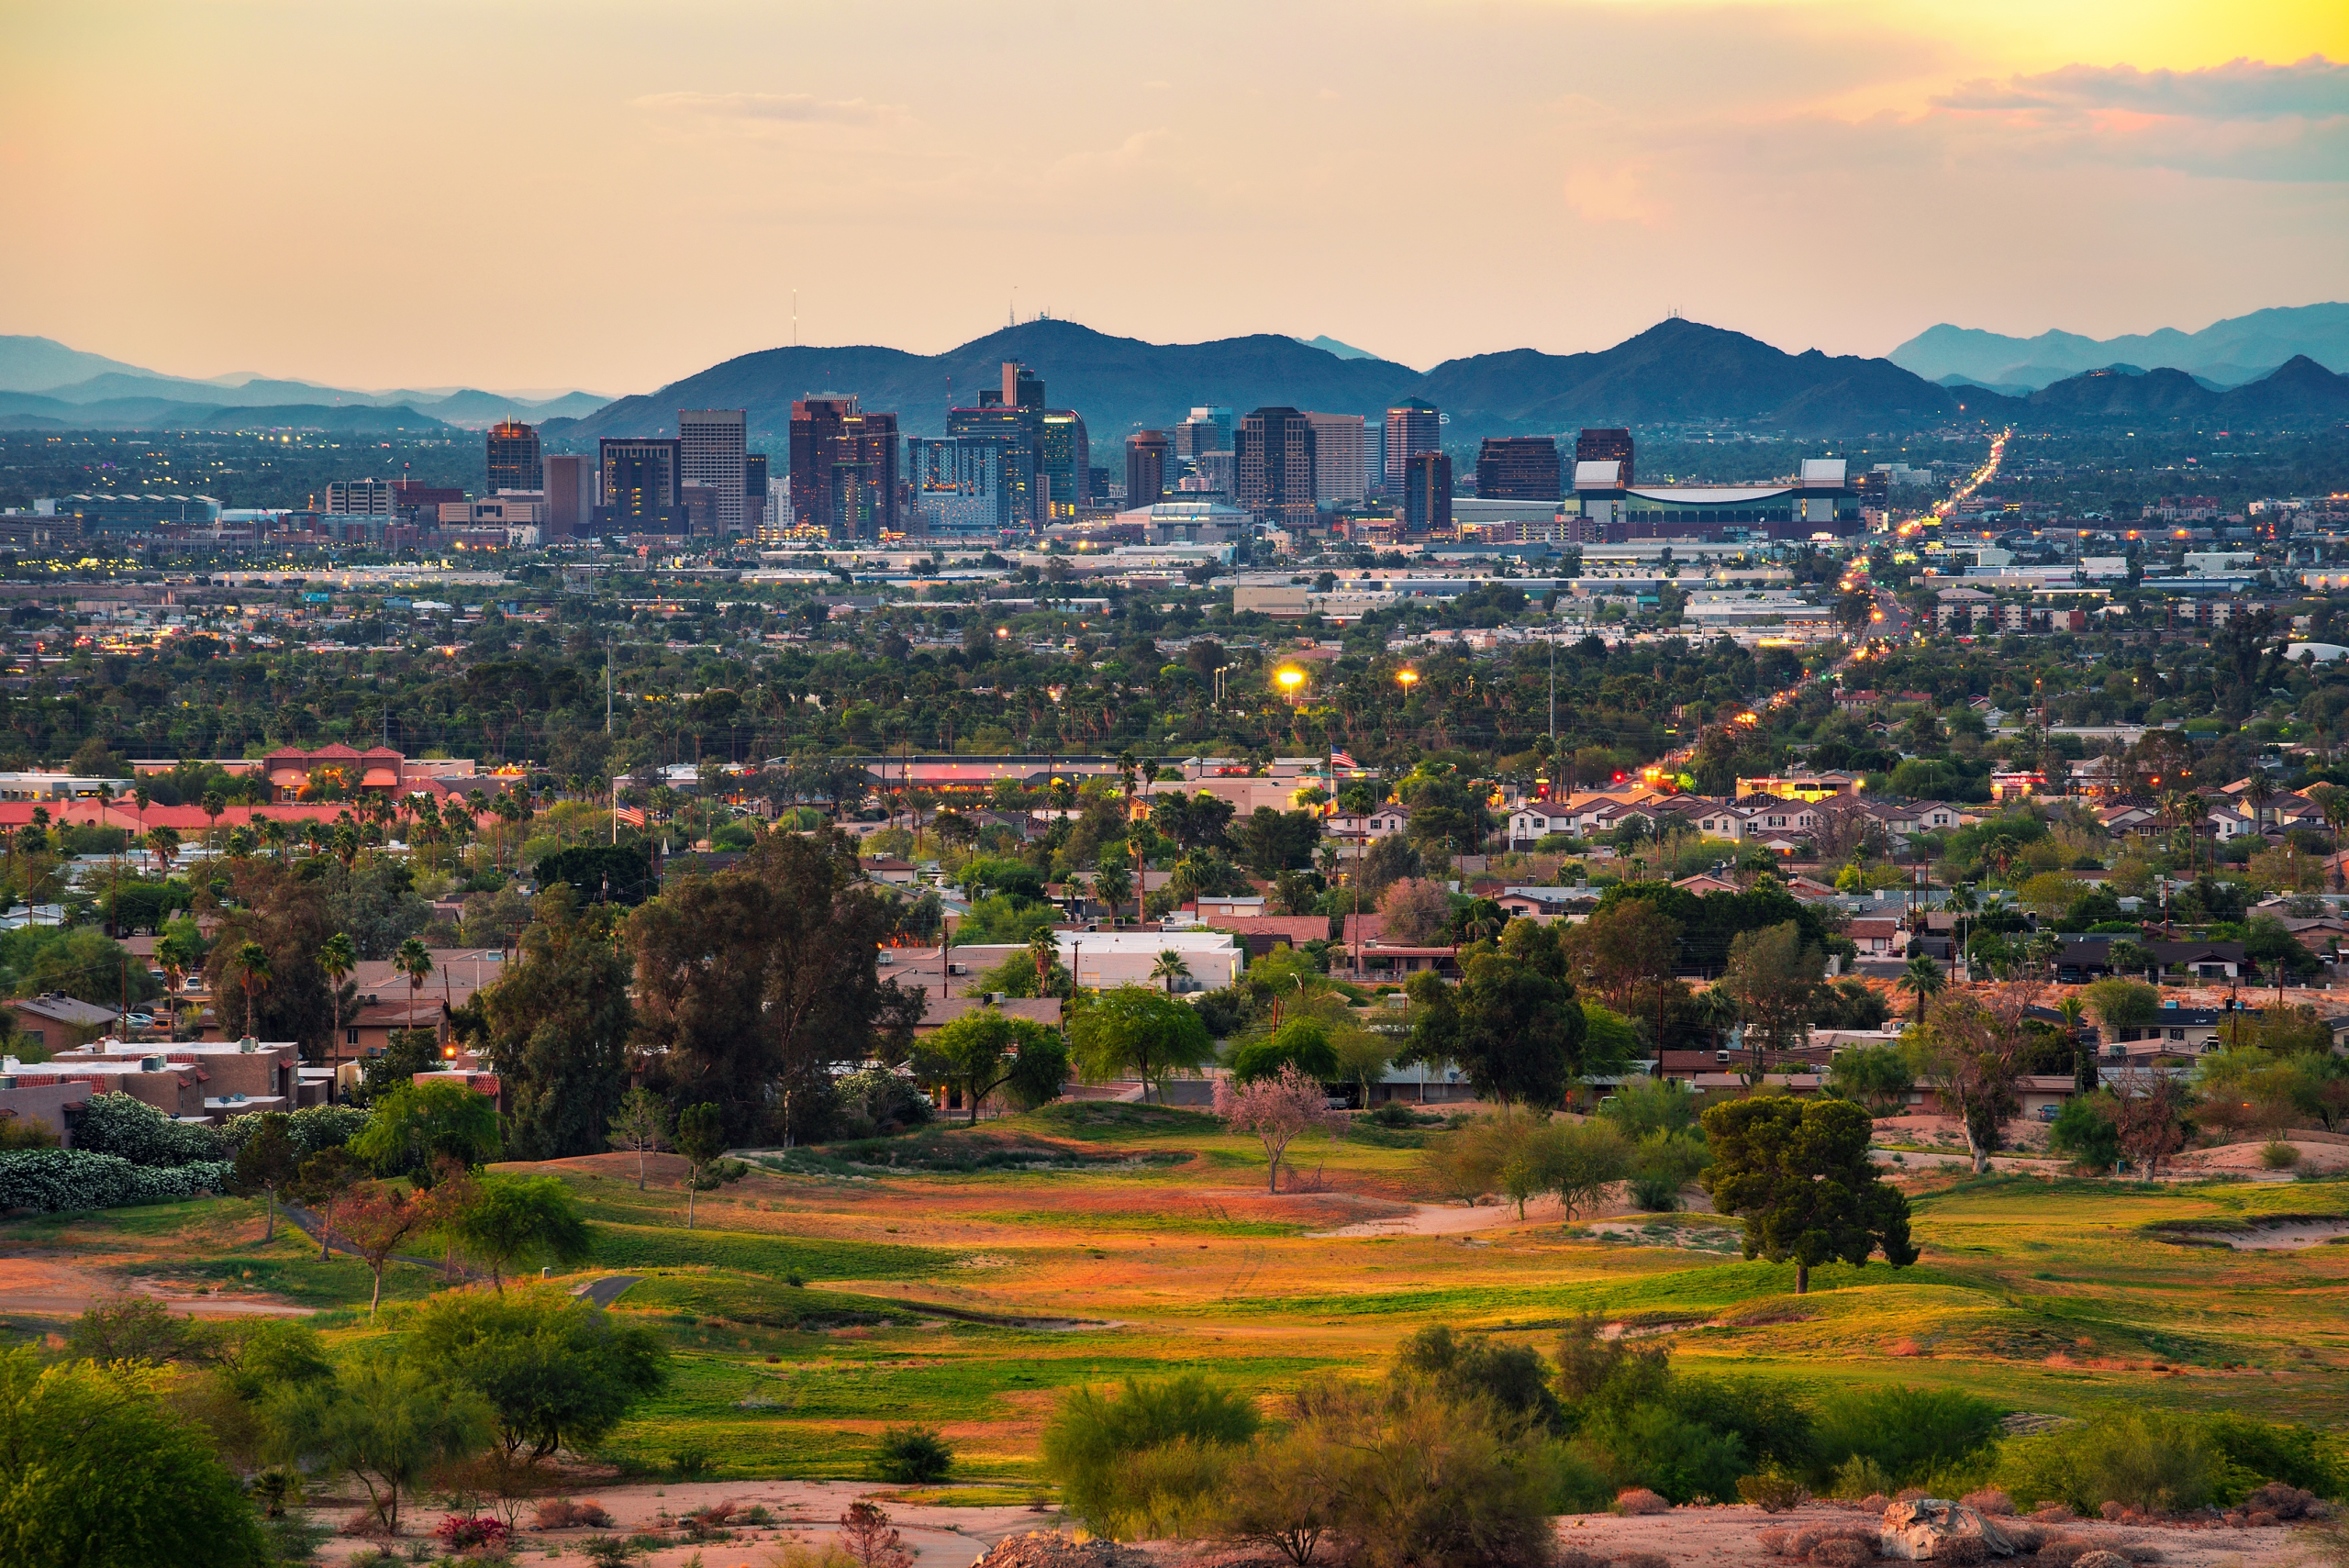 Arizona Housing Market Predictions for 2020